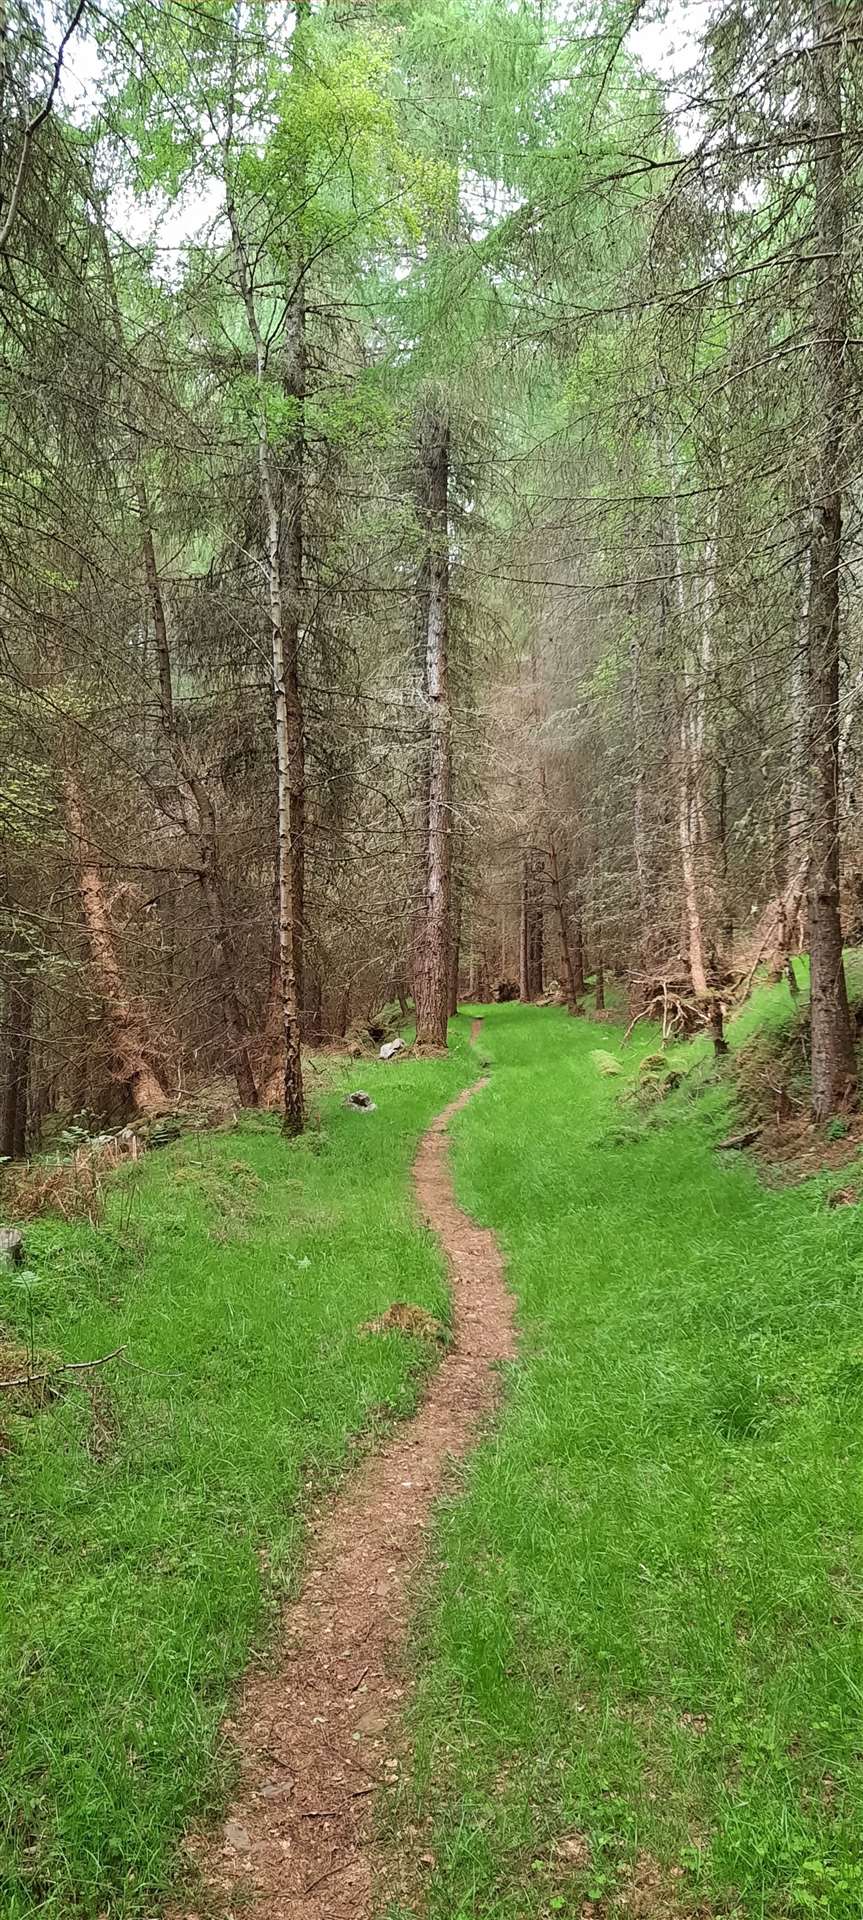 A lovely path climbs up through the woodland.